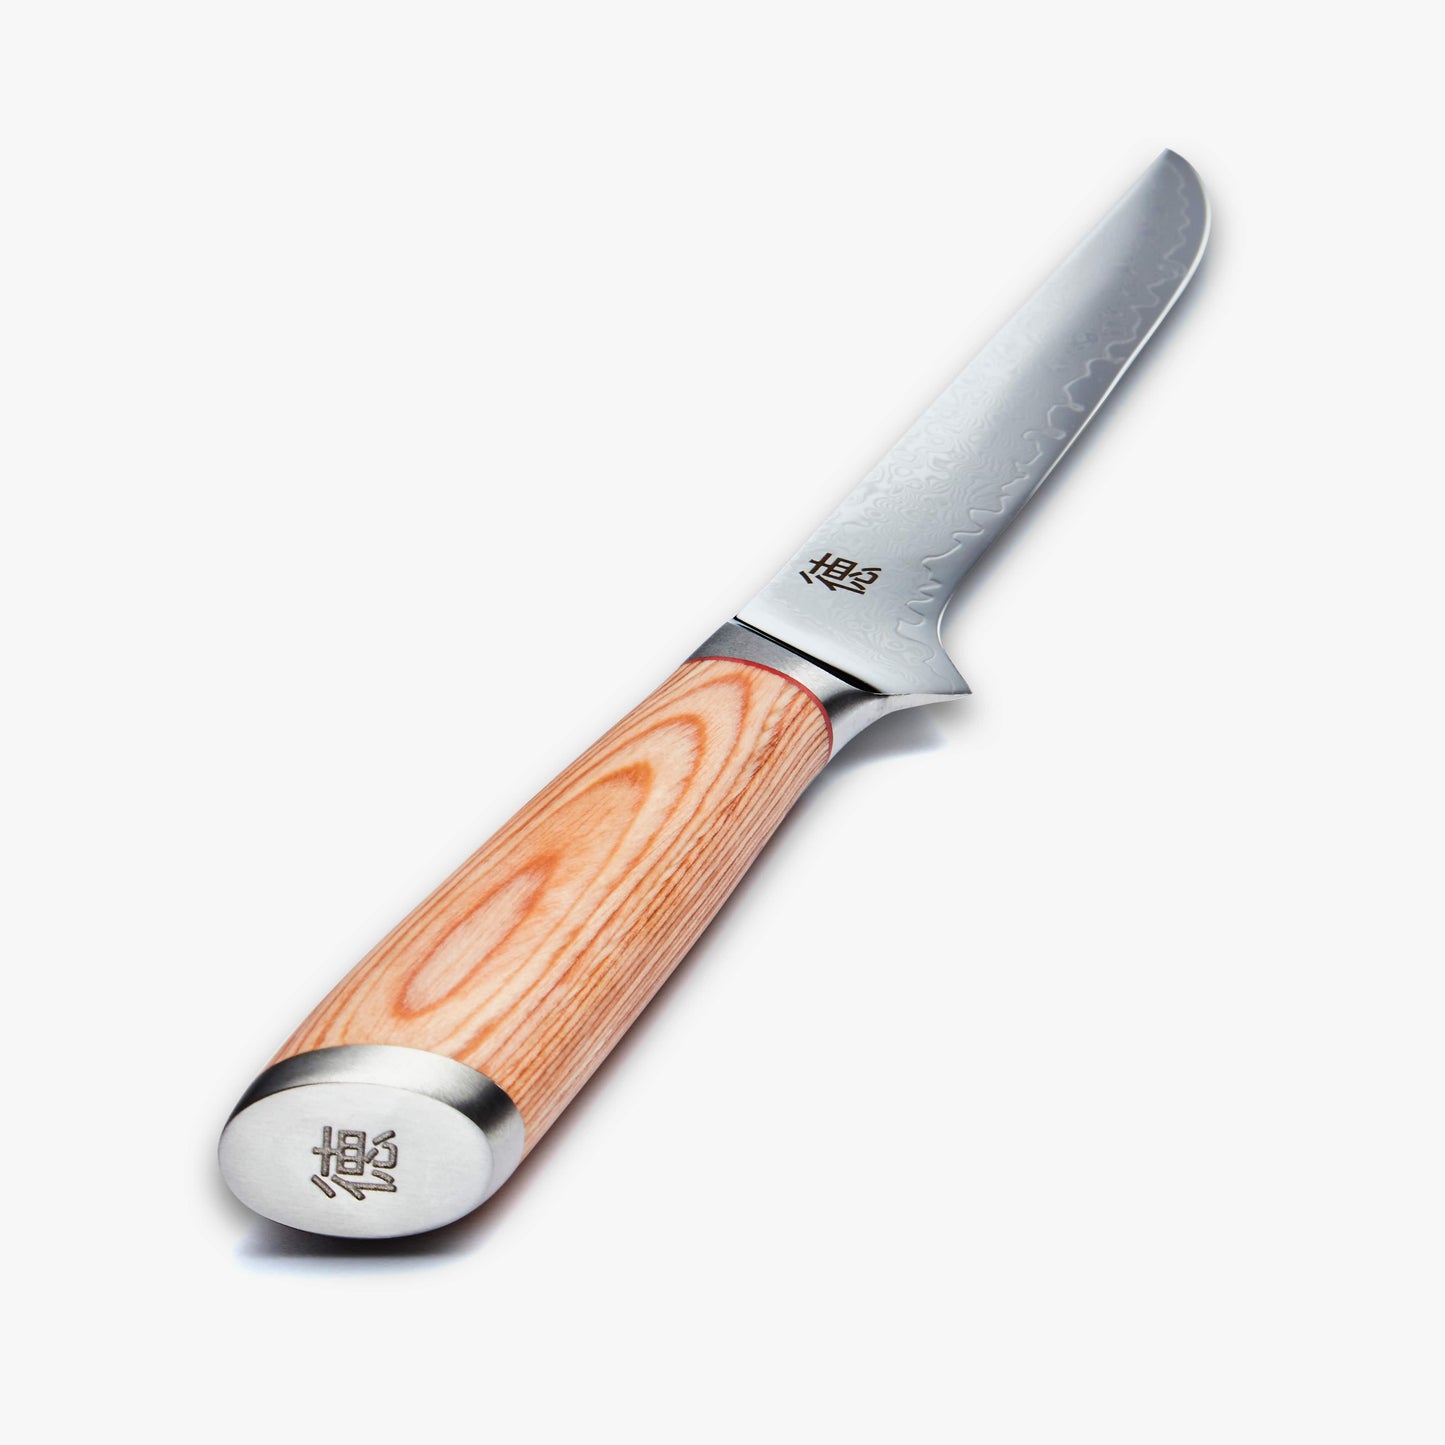 Haruta (はる た た) 6 -дюймовый нож для боевого ножа